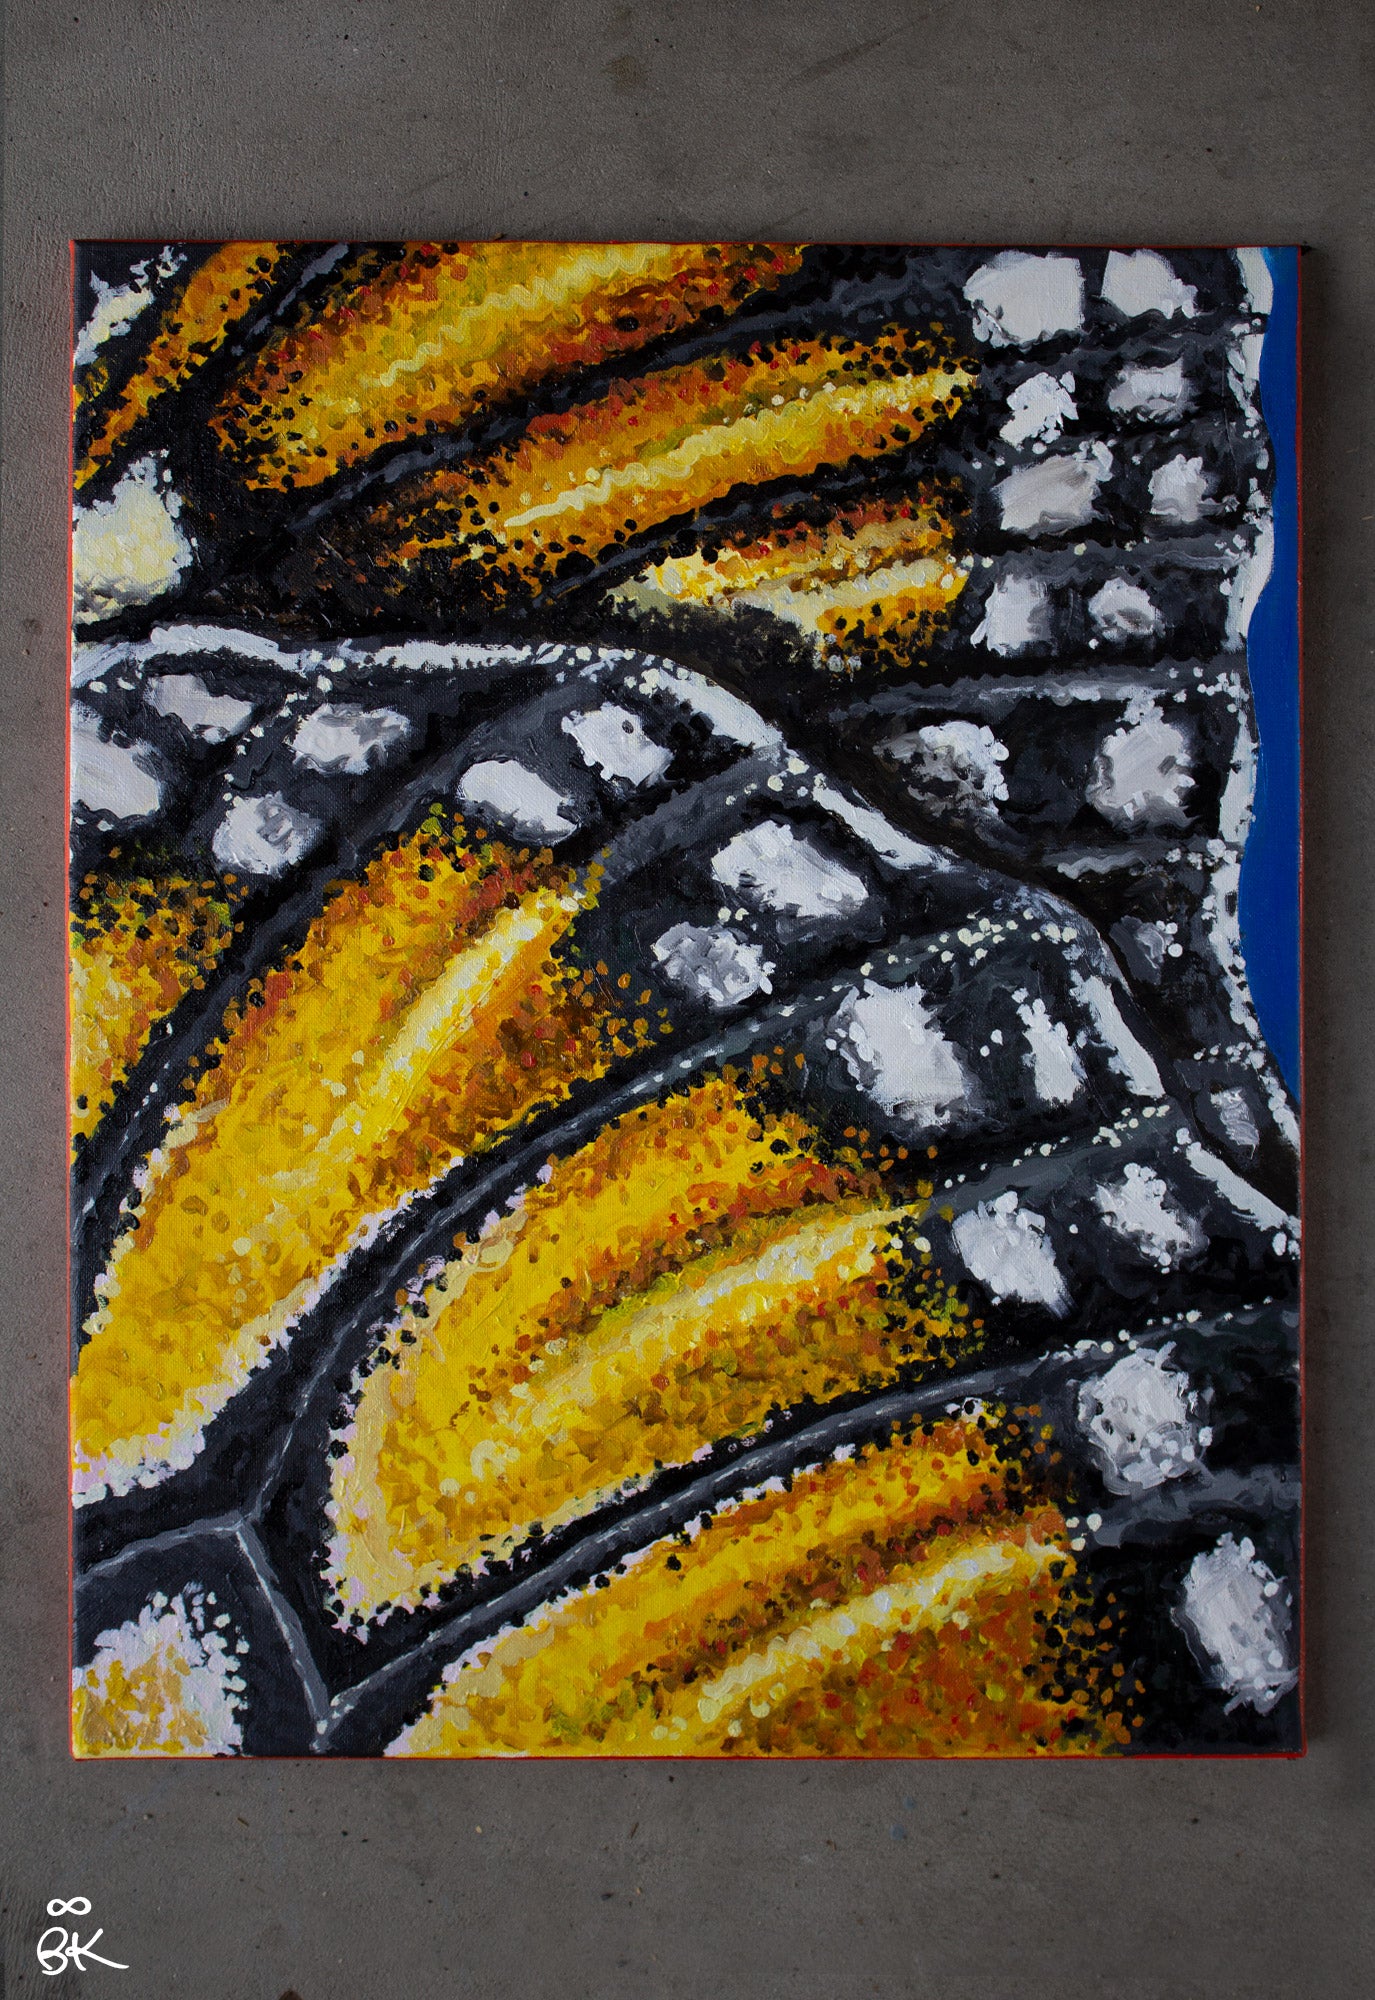 Pair of Monarch Wings - Original Oil Painting 16" x 20"